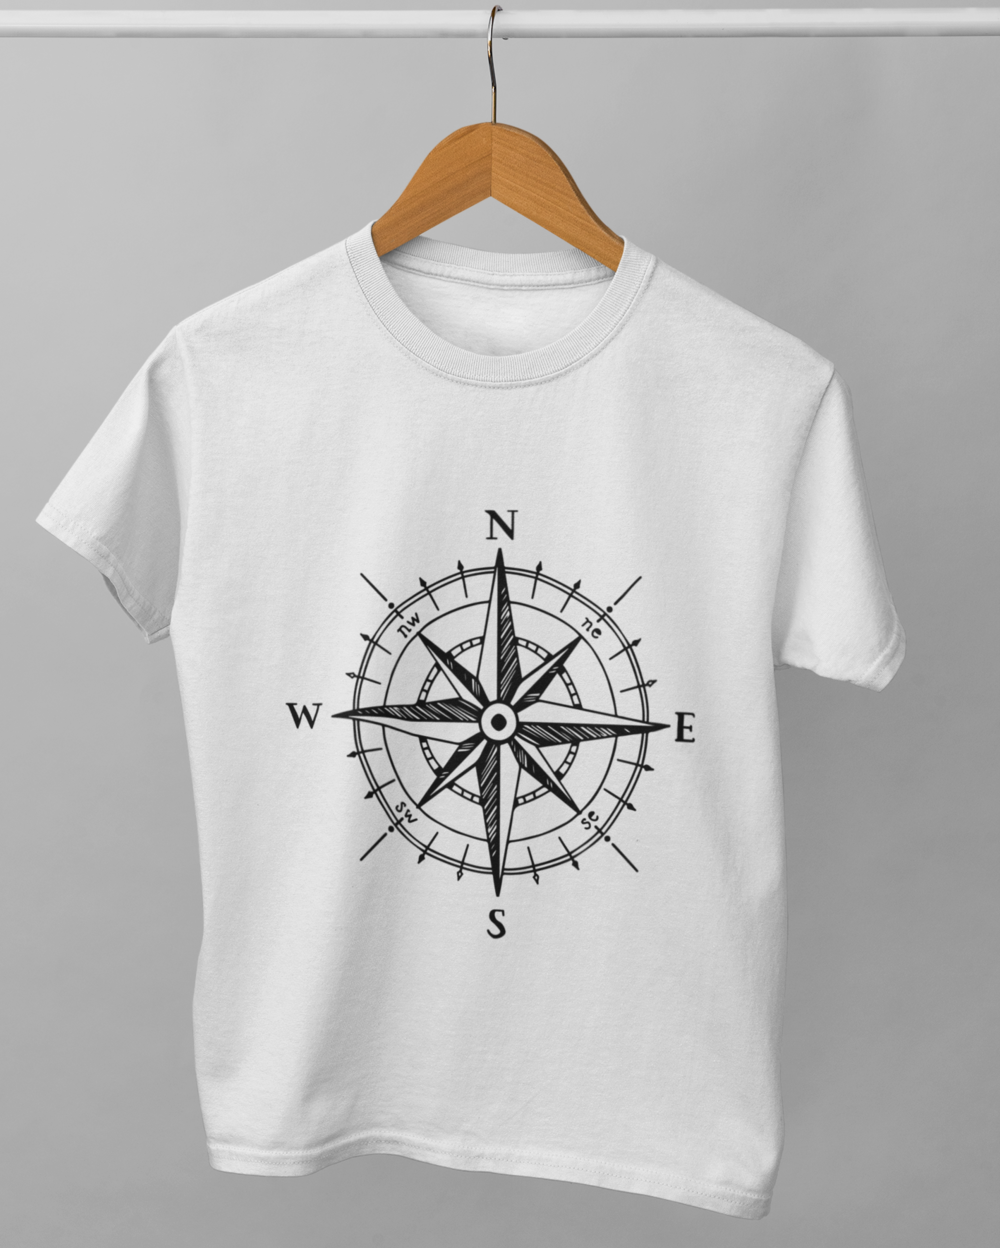 Explore the World: Compass Rose Adventure T-Shirt